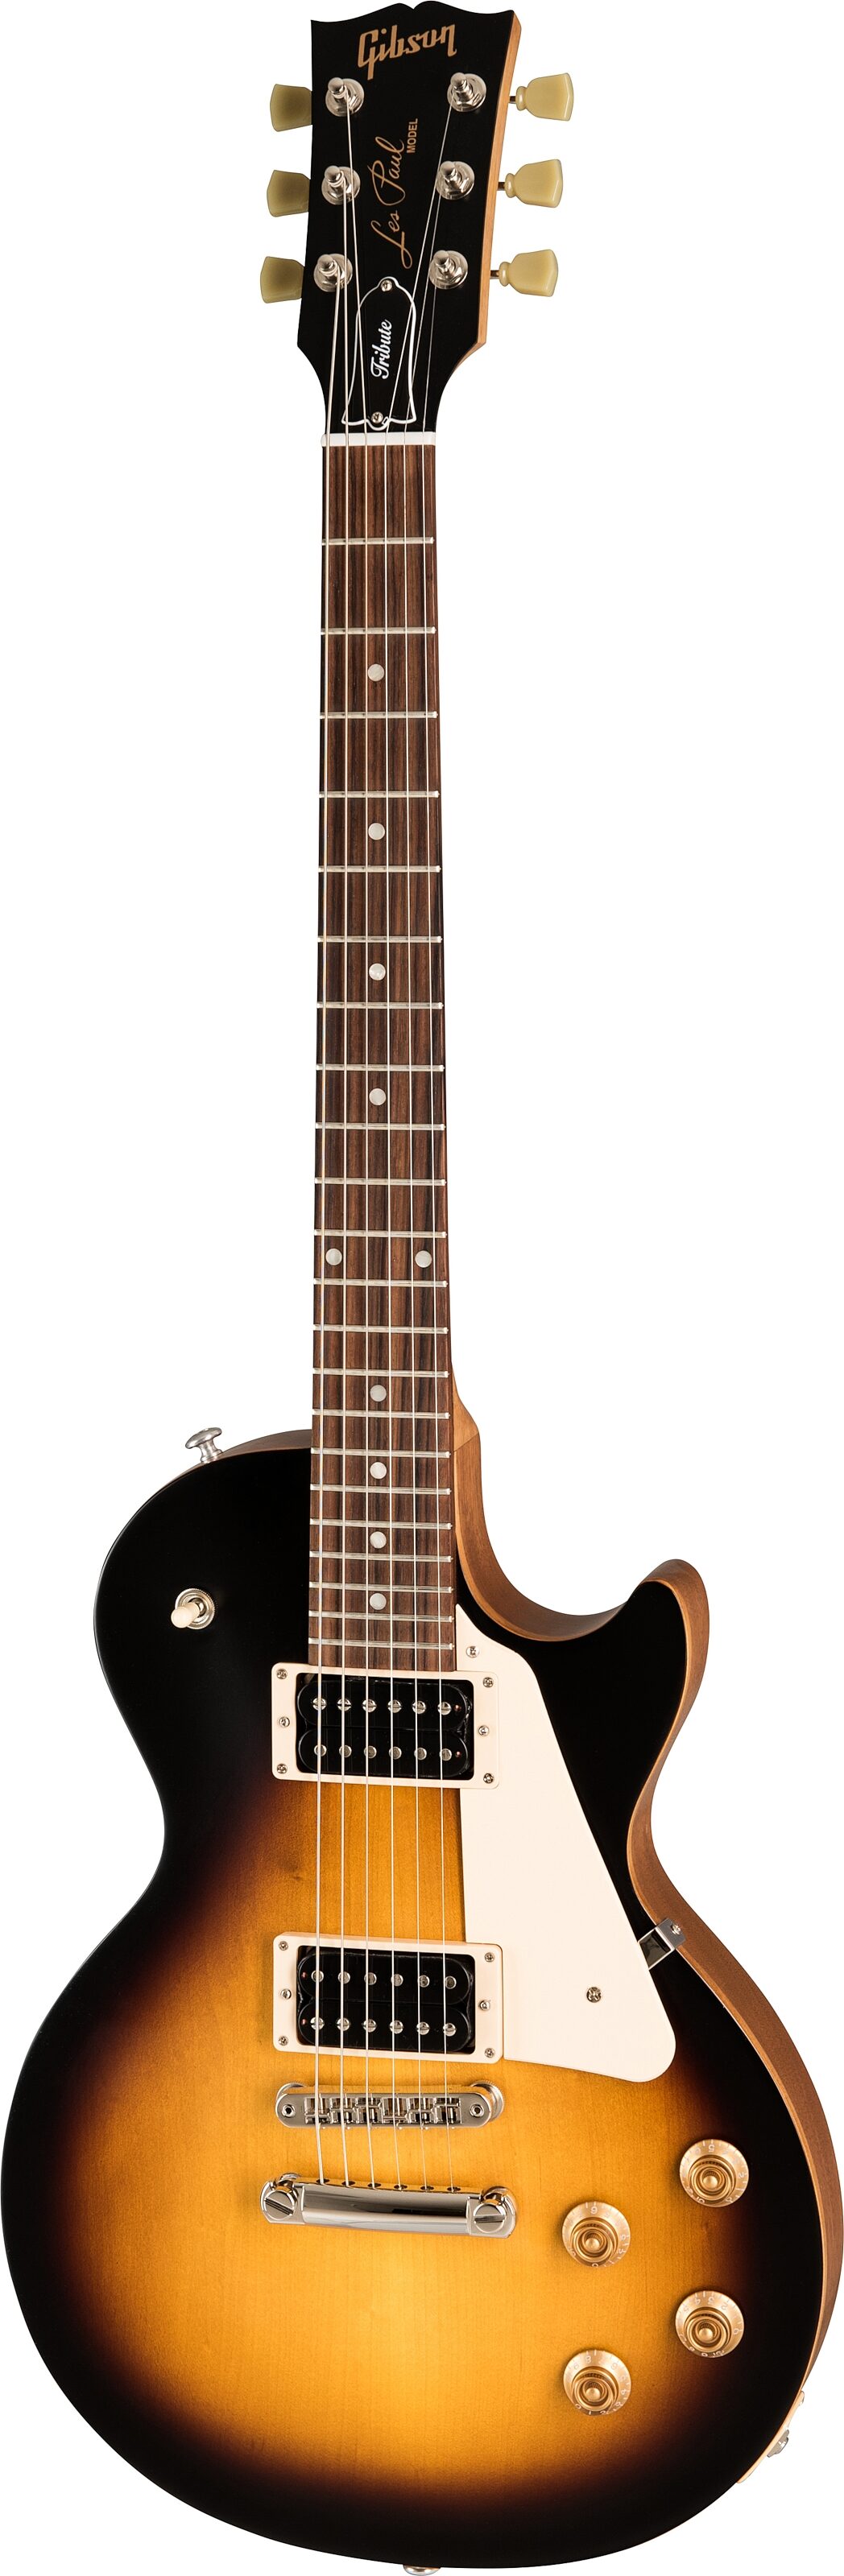 Gibson 2019 Les Paul Studio Tribute Electric Guitar | zZounds